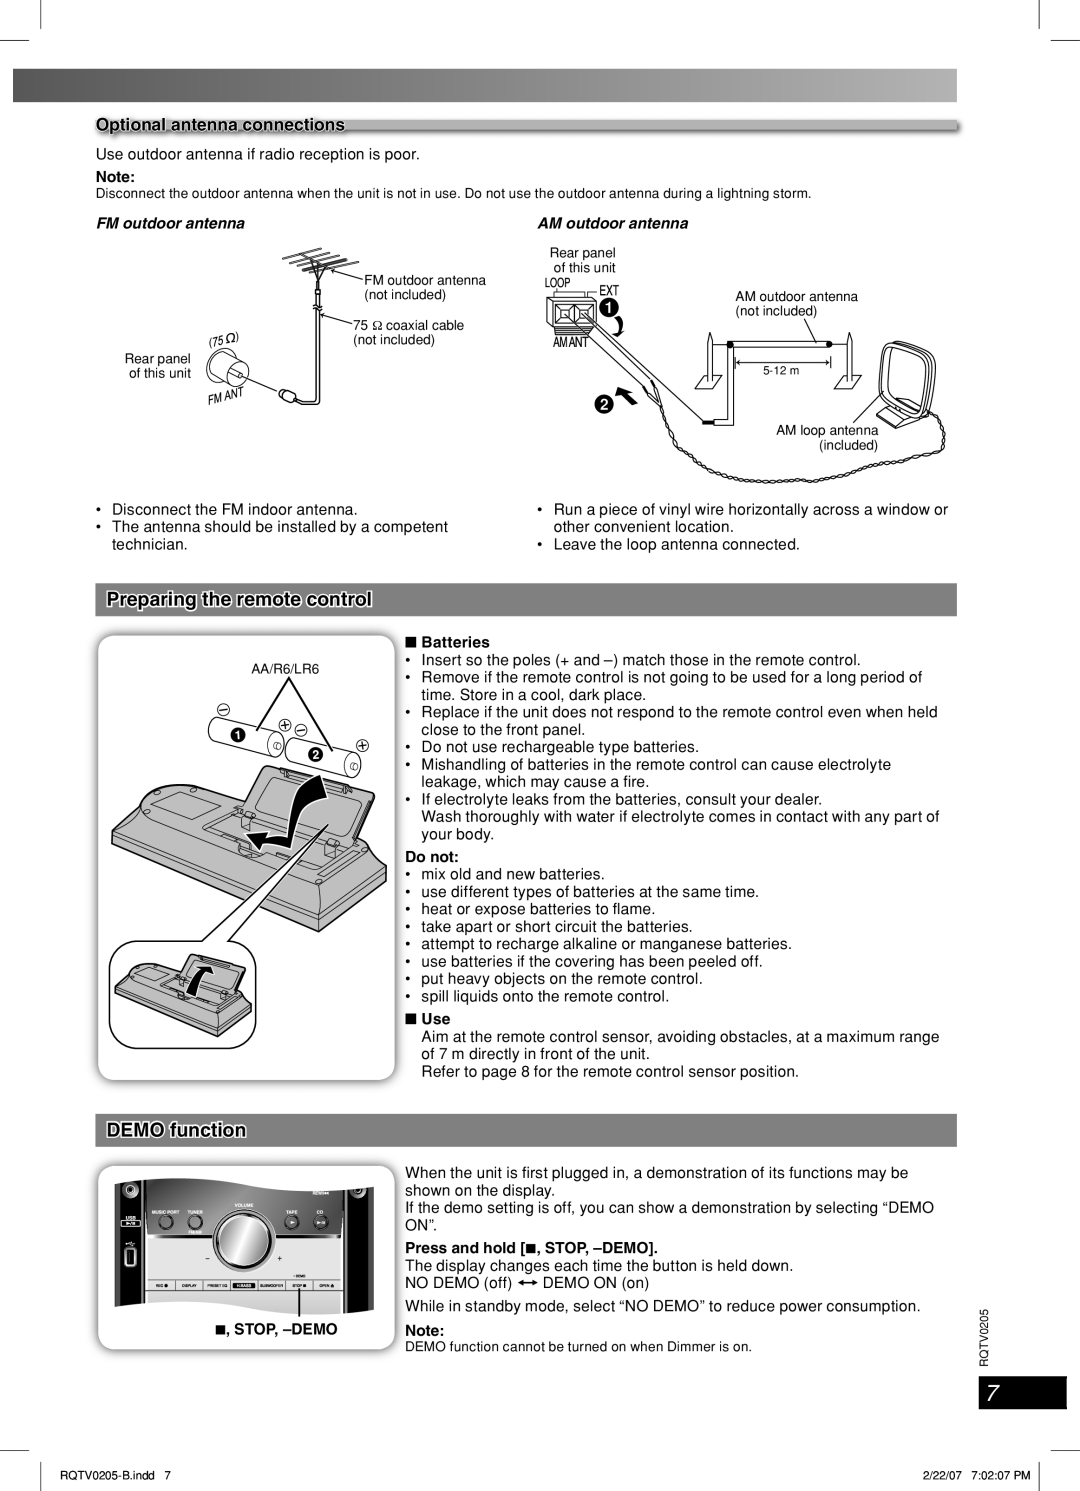 Panasonic SC-AK750 Preparing the remote control, Français Lang, DEMO function, Deutsch Dansk, FM outdoor antenna 